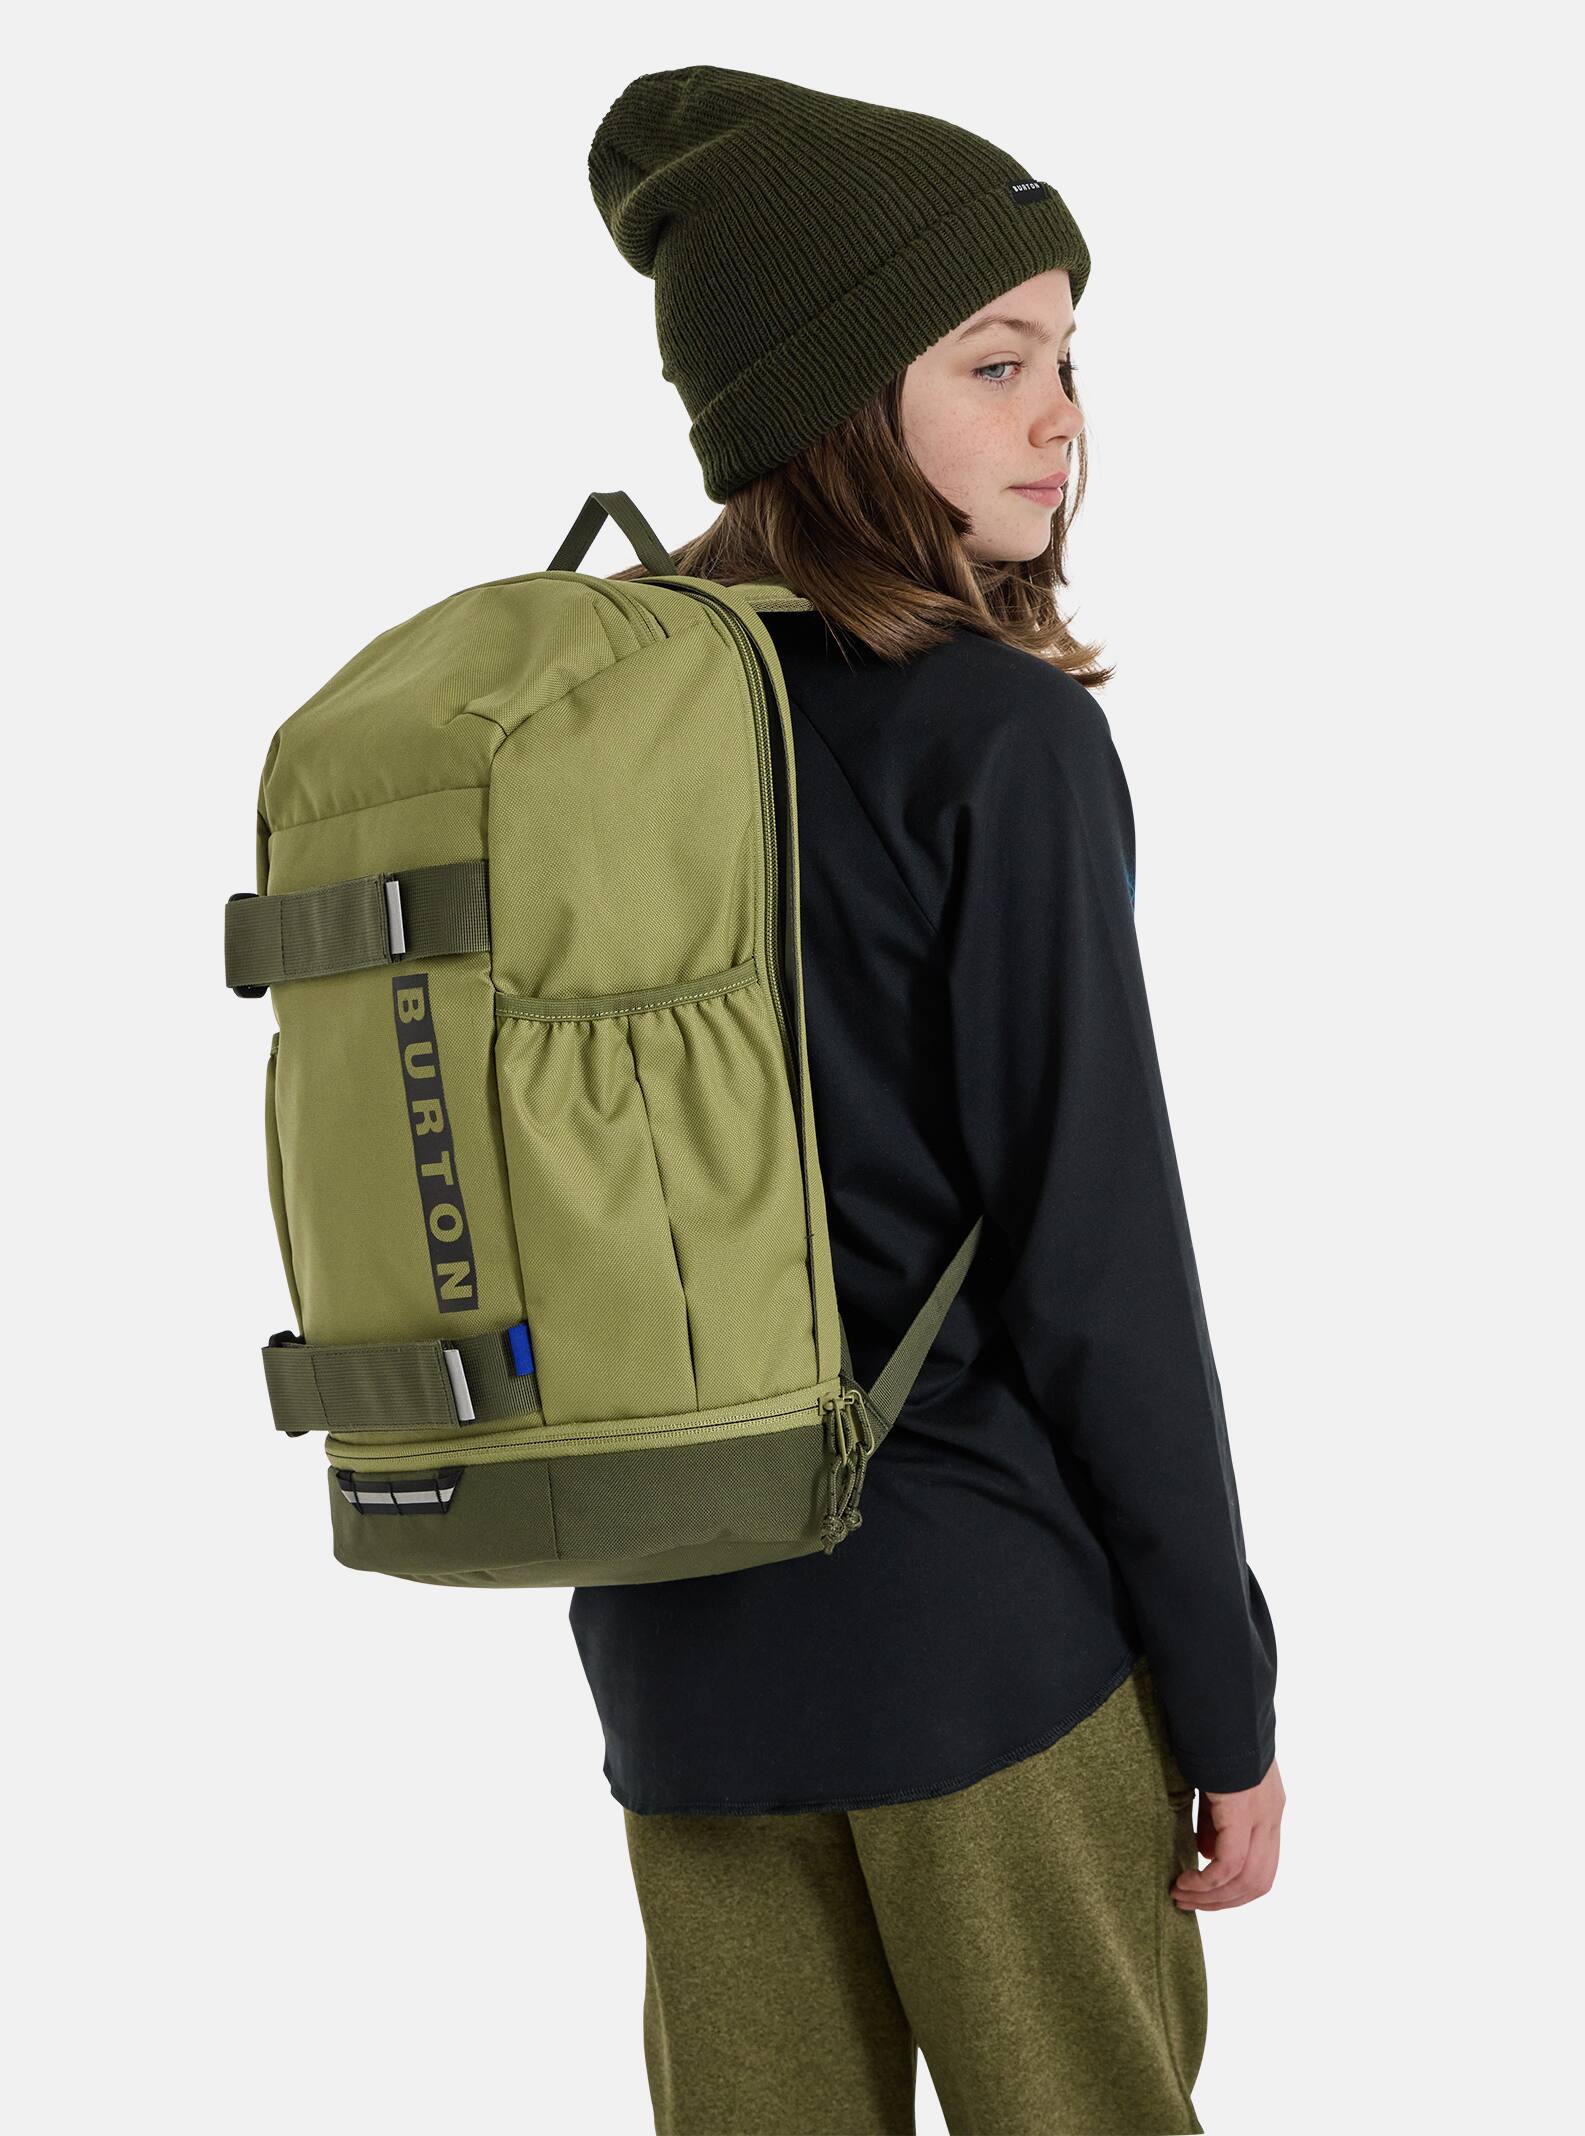 Backpacks & | Burton Snowboards